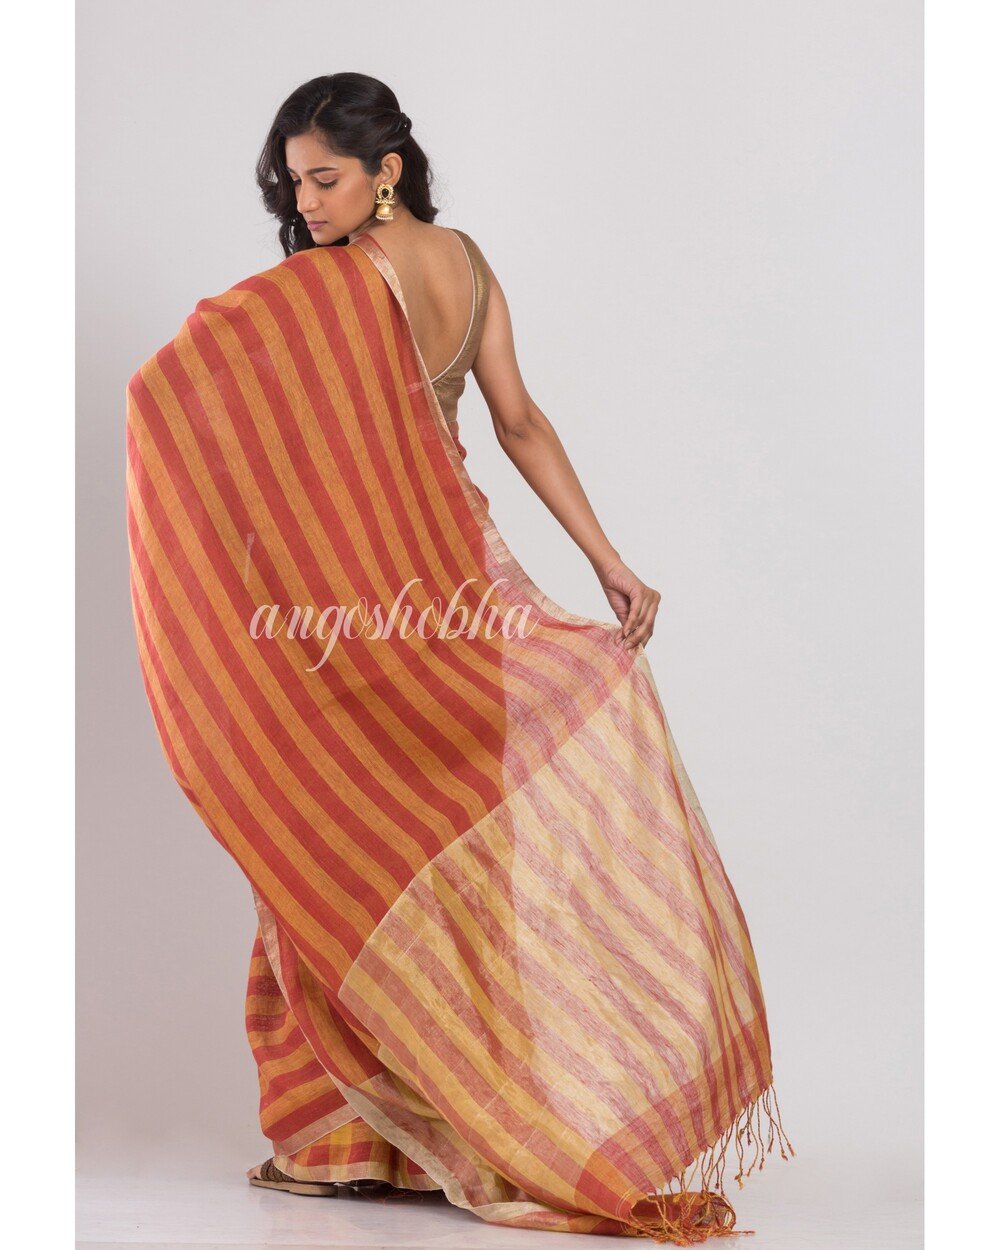 Women's Orange and red stripes handwoven linen saree - Angoshobha